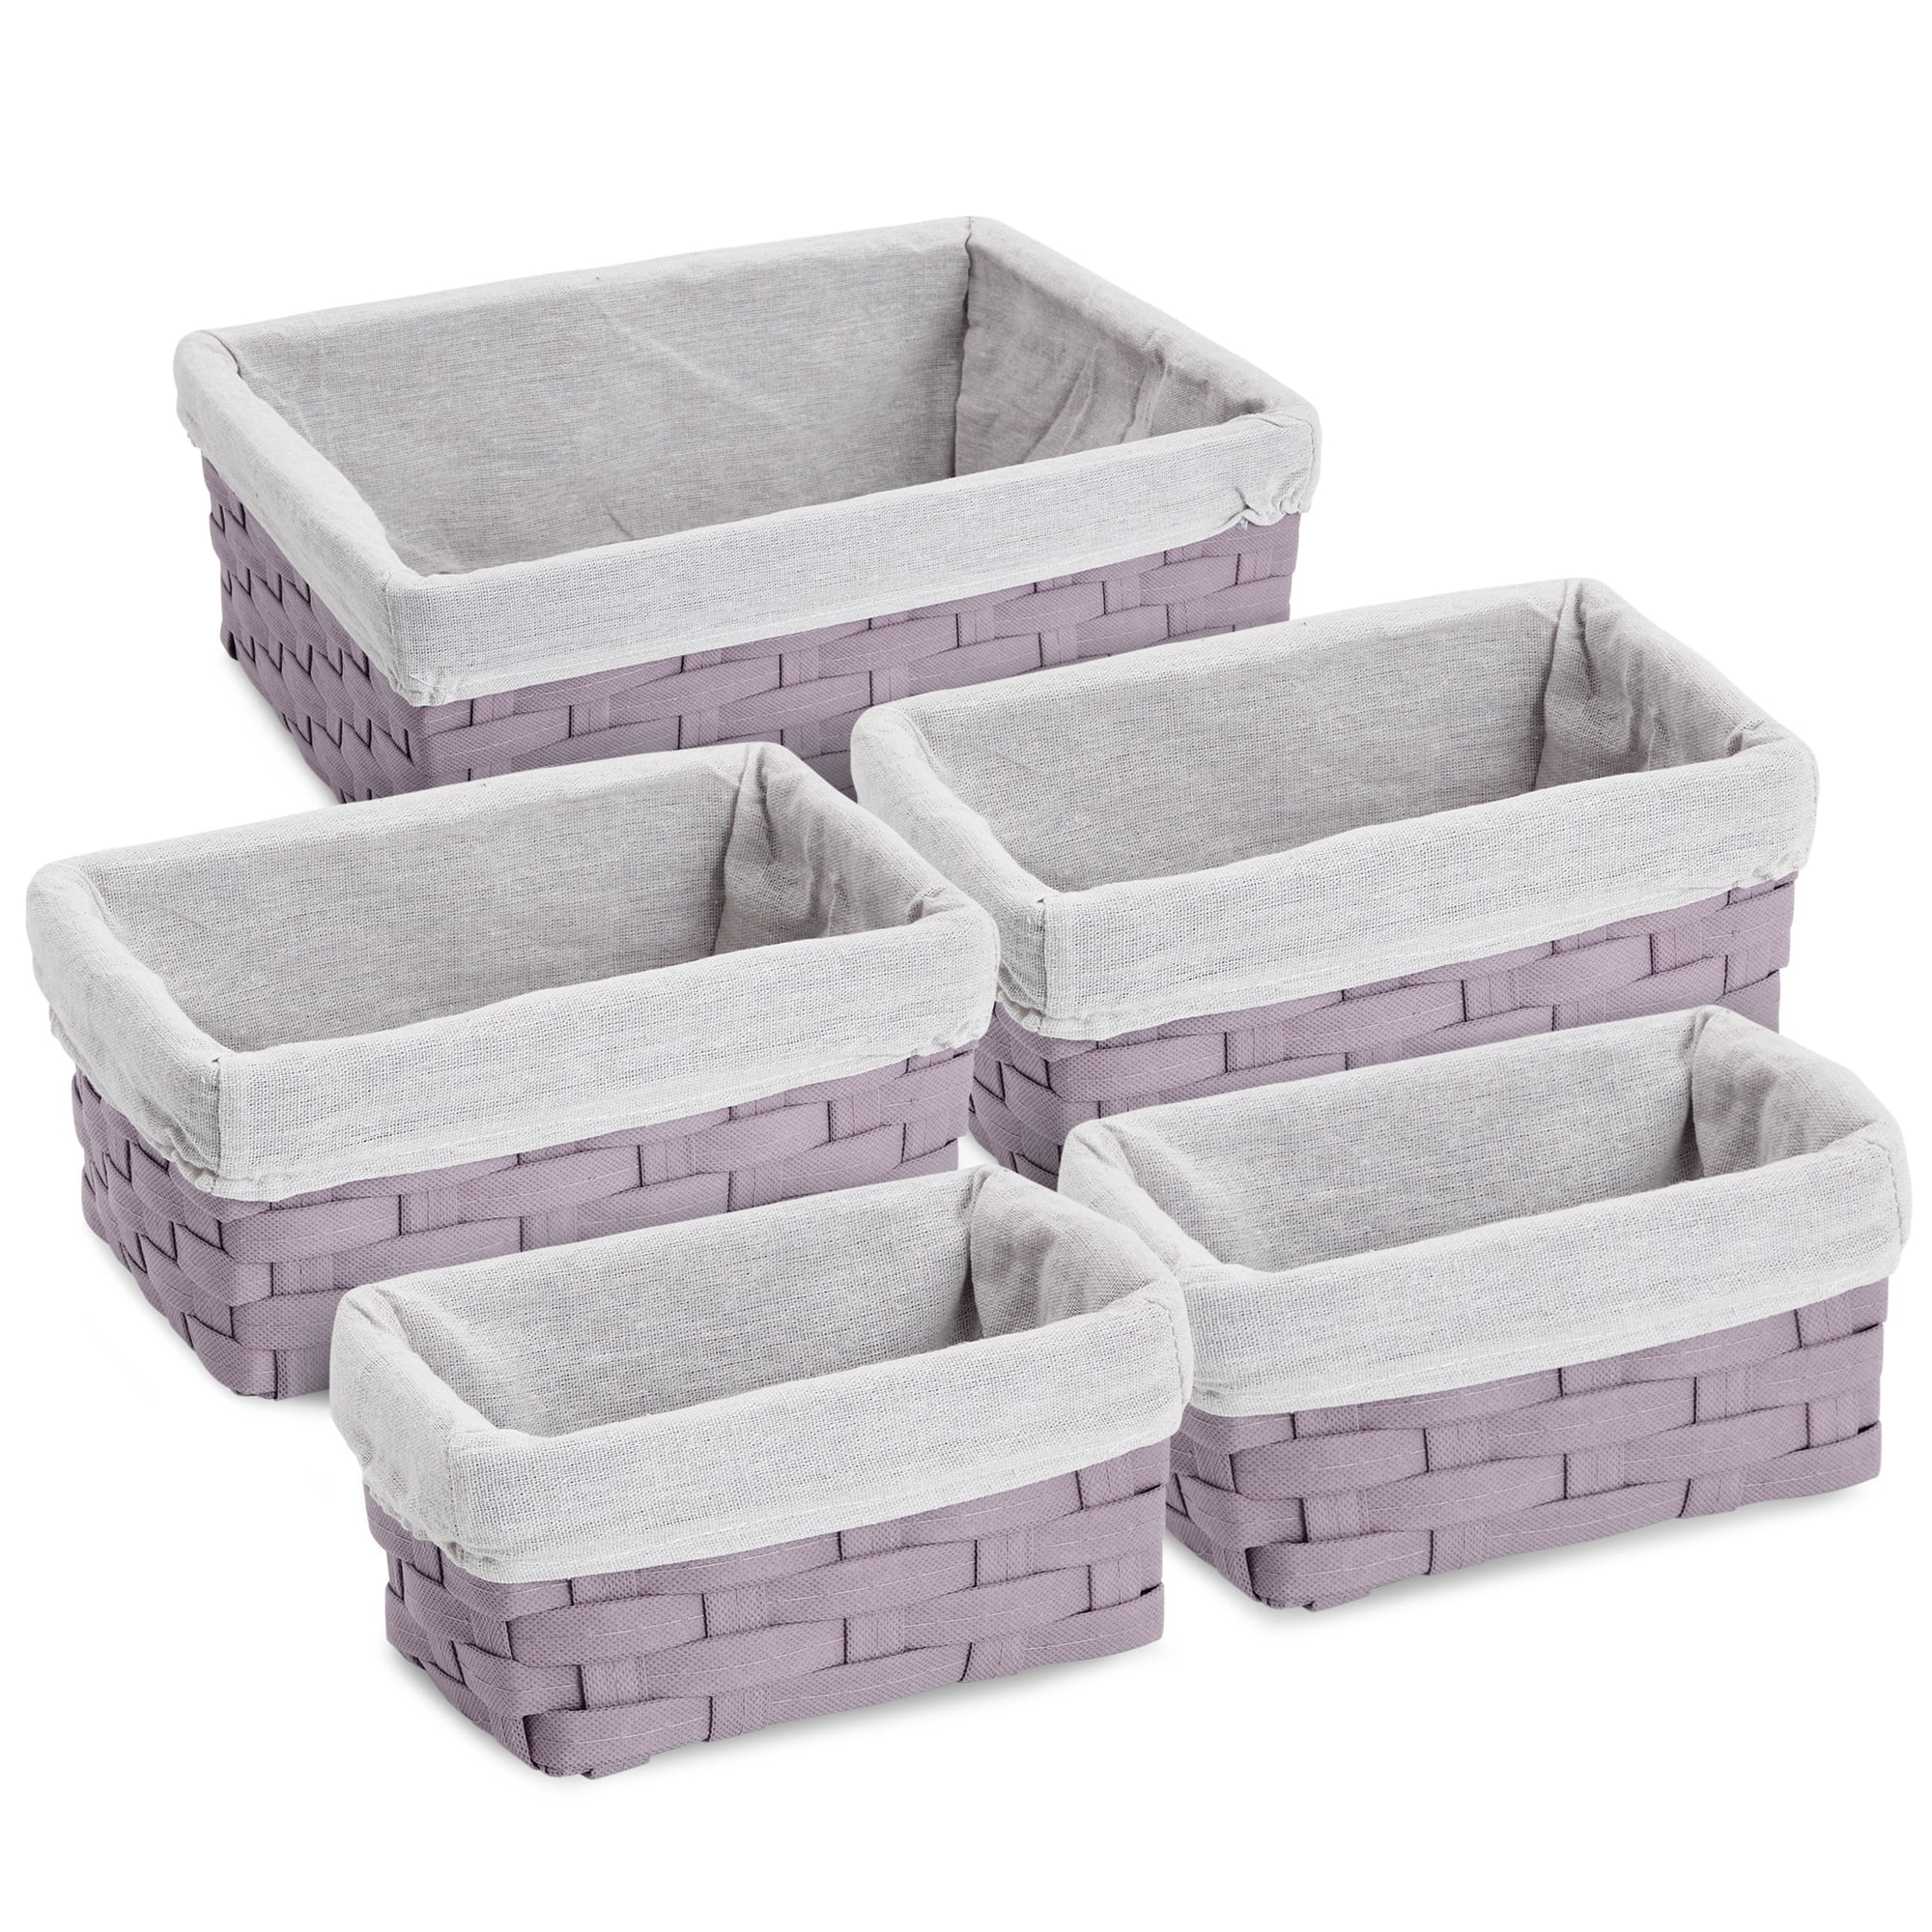 WeeNest Baskets for Organizing, Storage Basket, Wicker Baskets, Undershelf  Storage Basket, Baskets for Closet Organization, Rectangular Basket, Resin